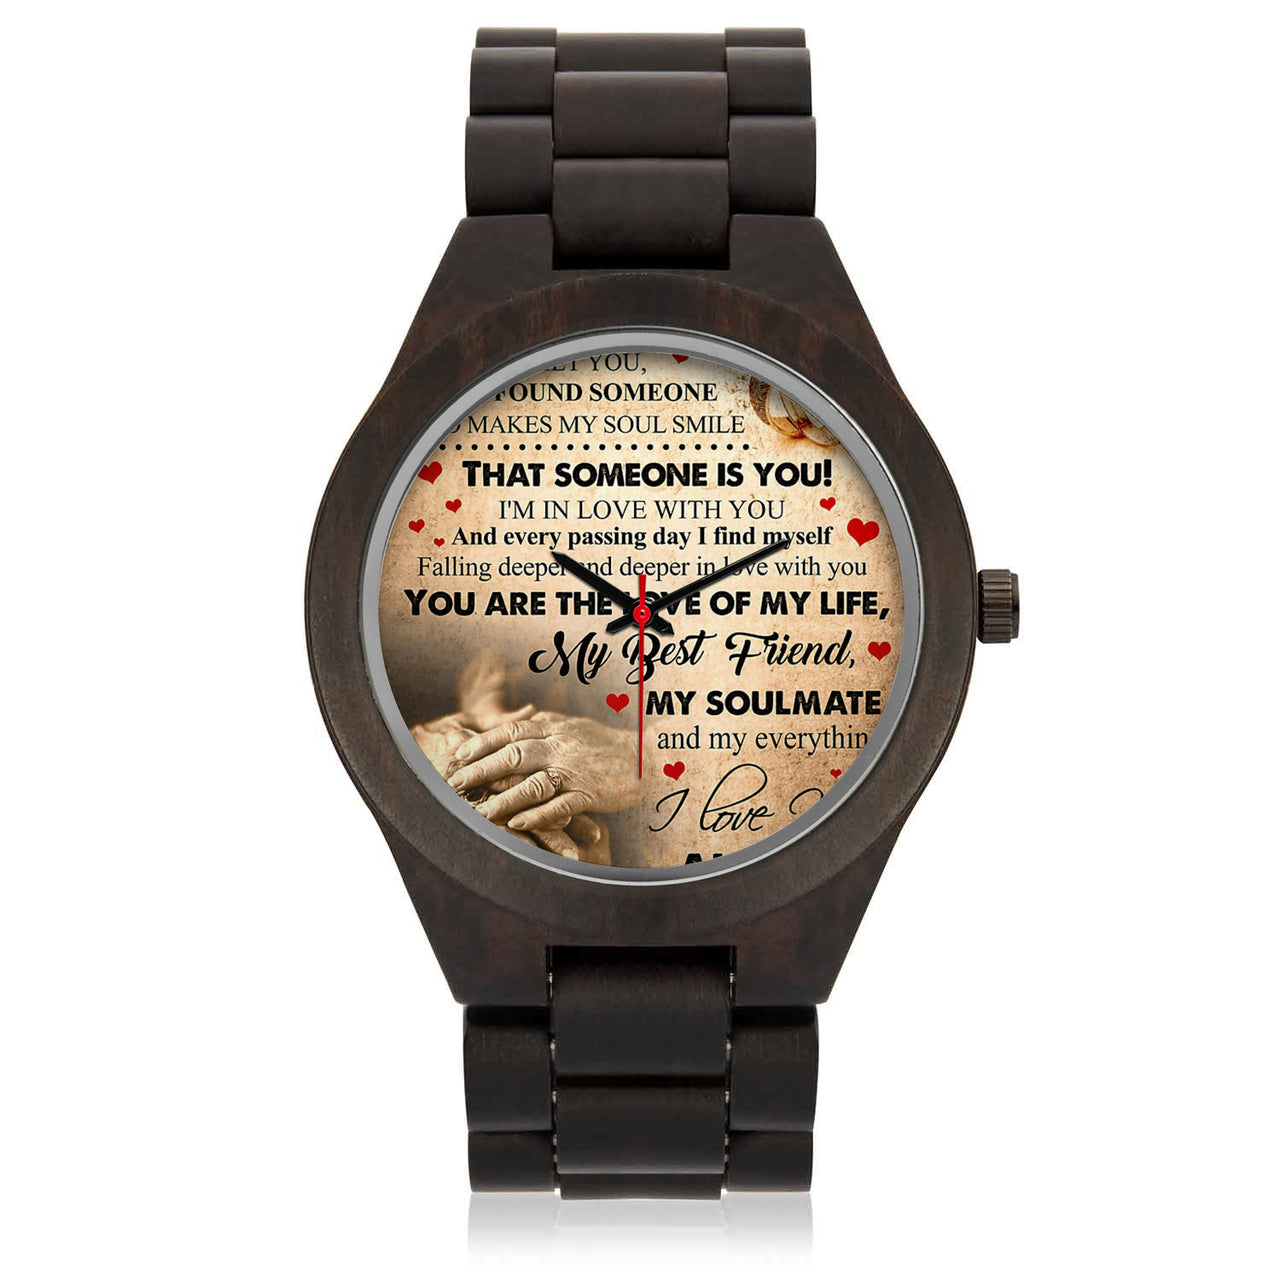 Personalized watch